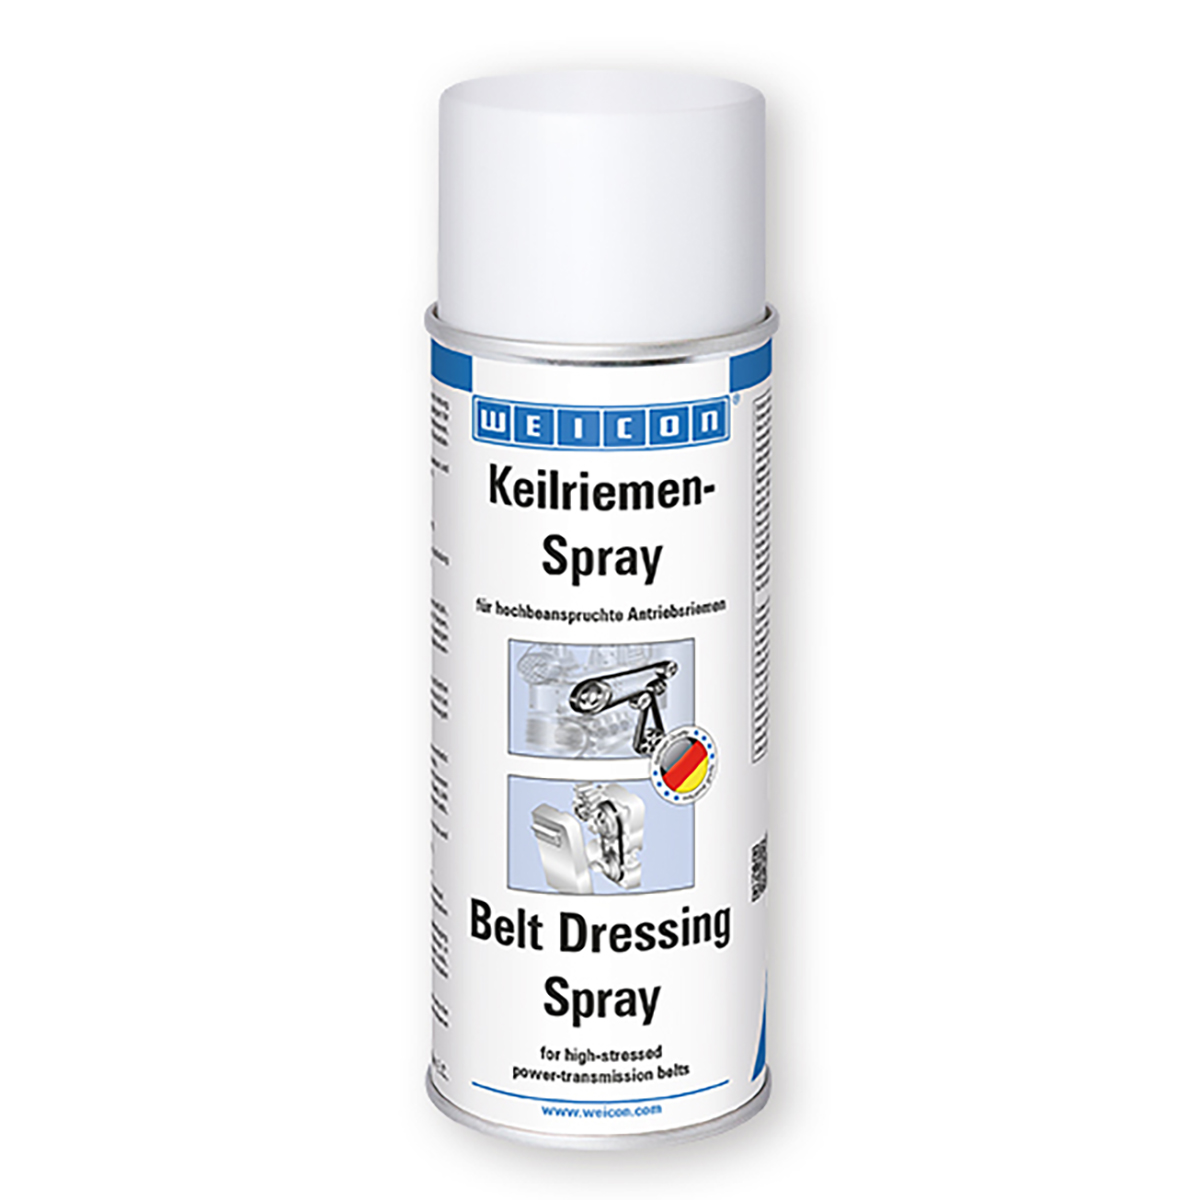 Weicon Belt Dressing Spray in Application